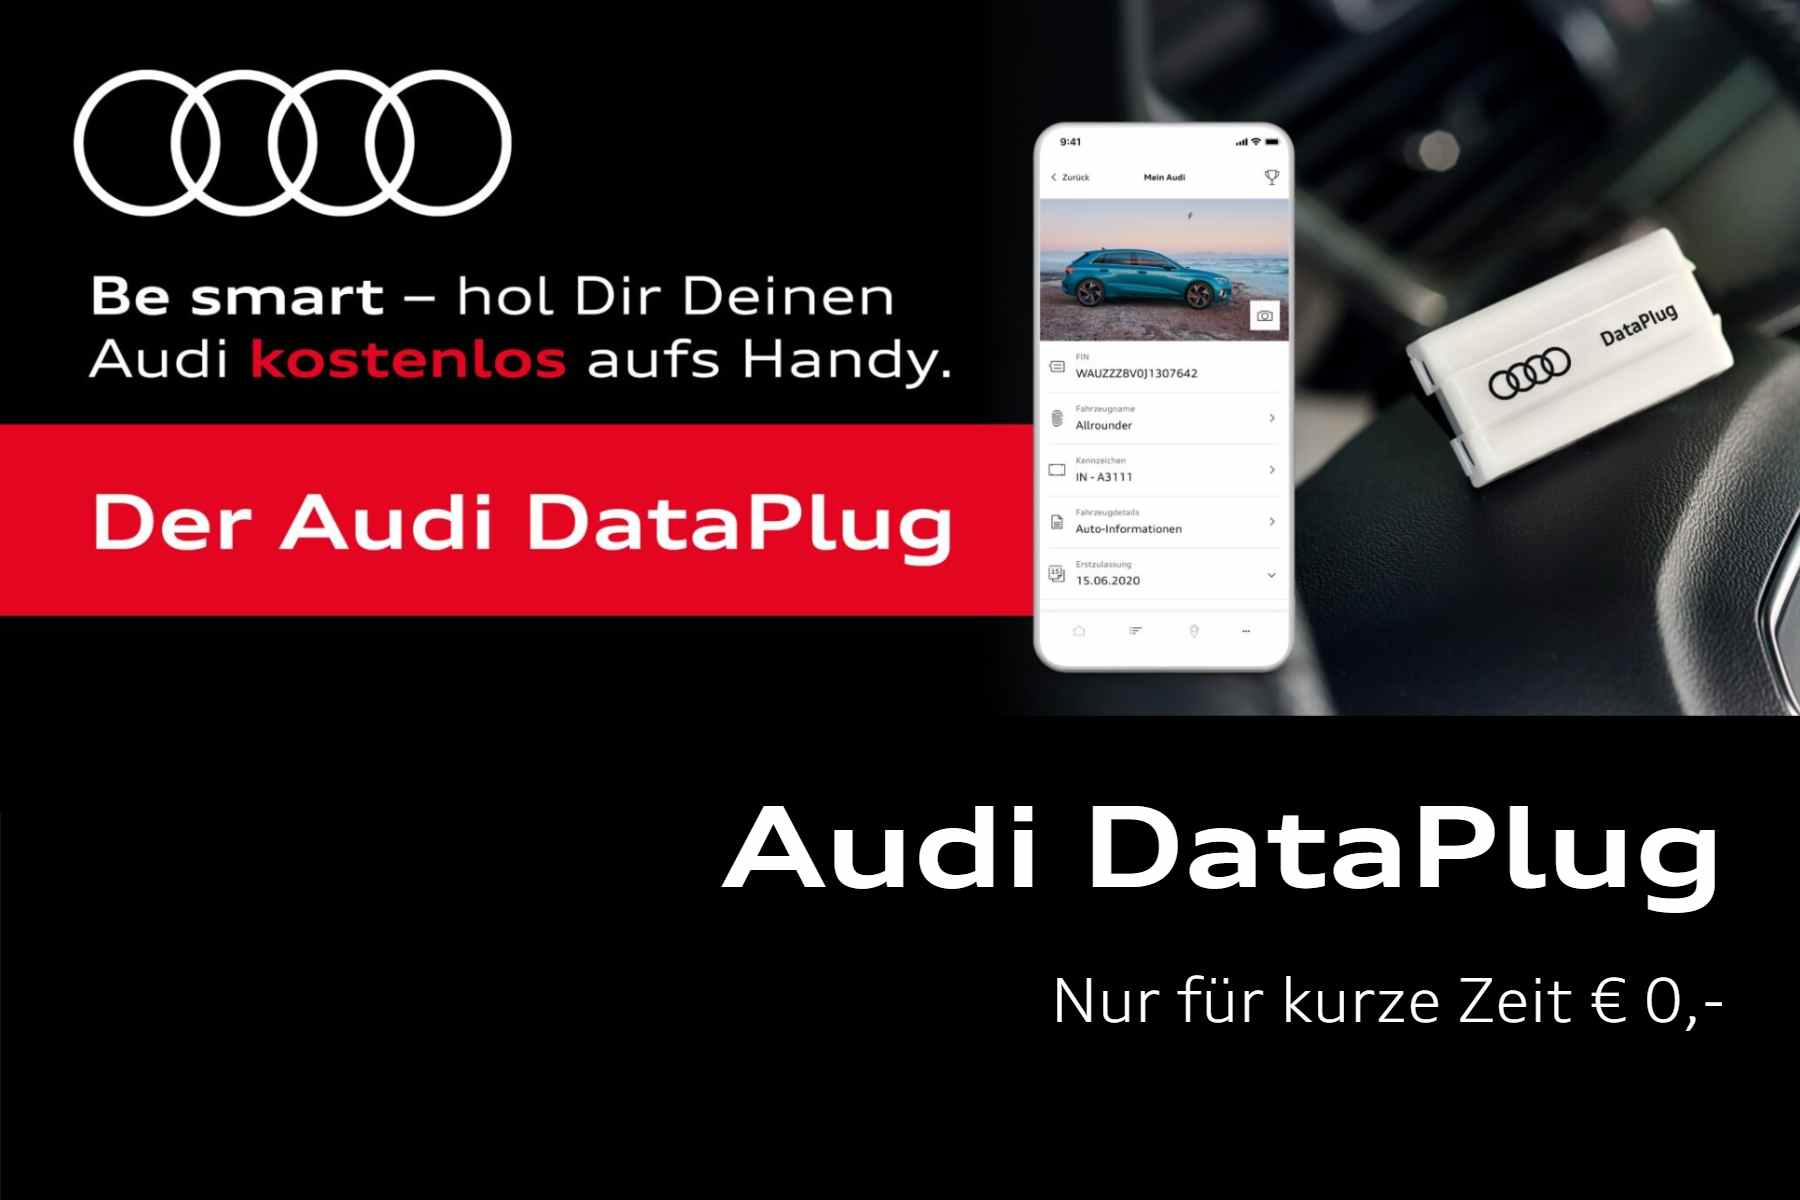 Audi Data Plug